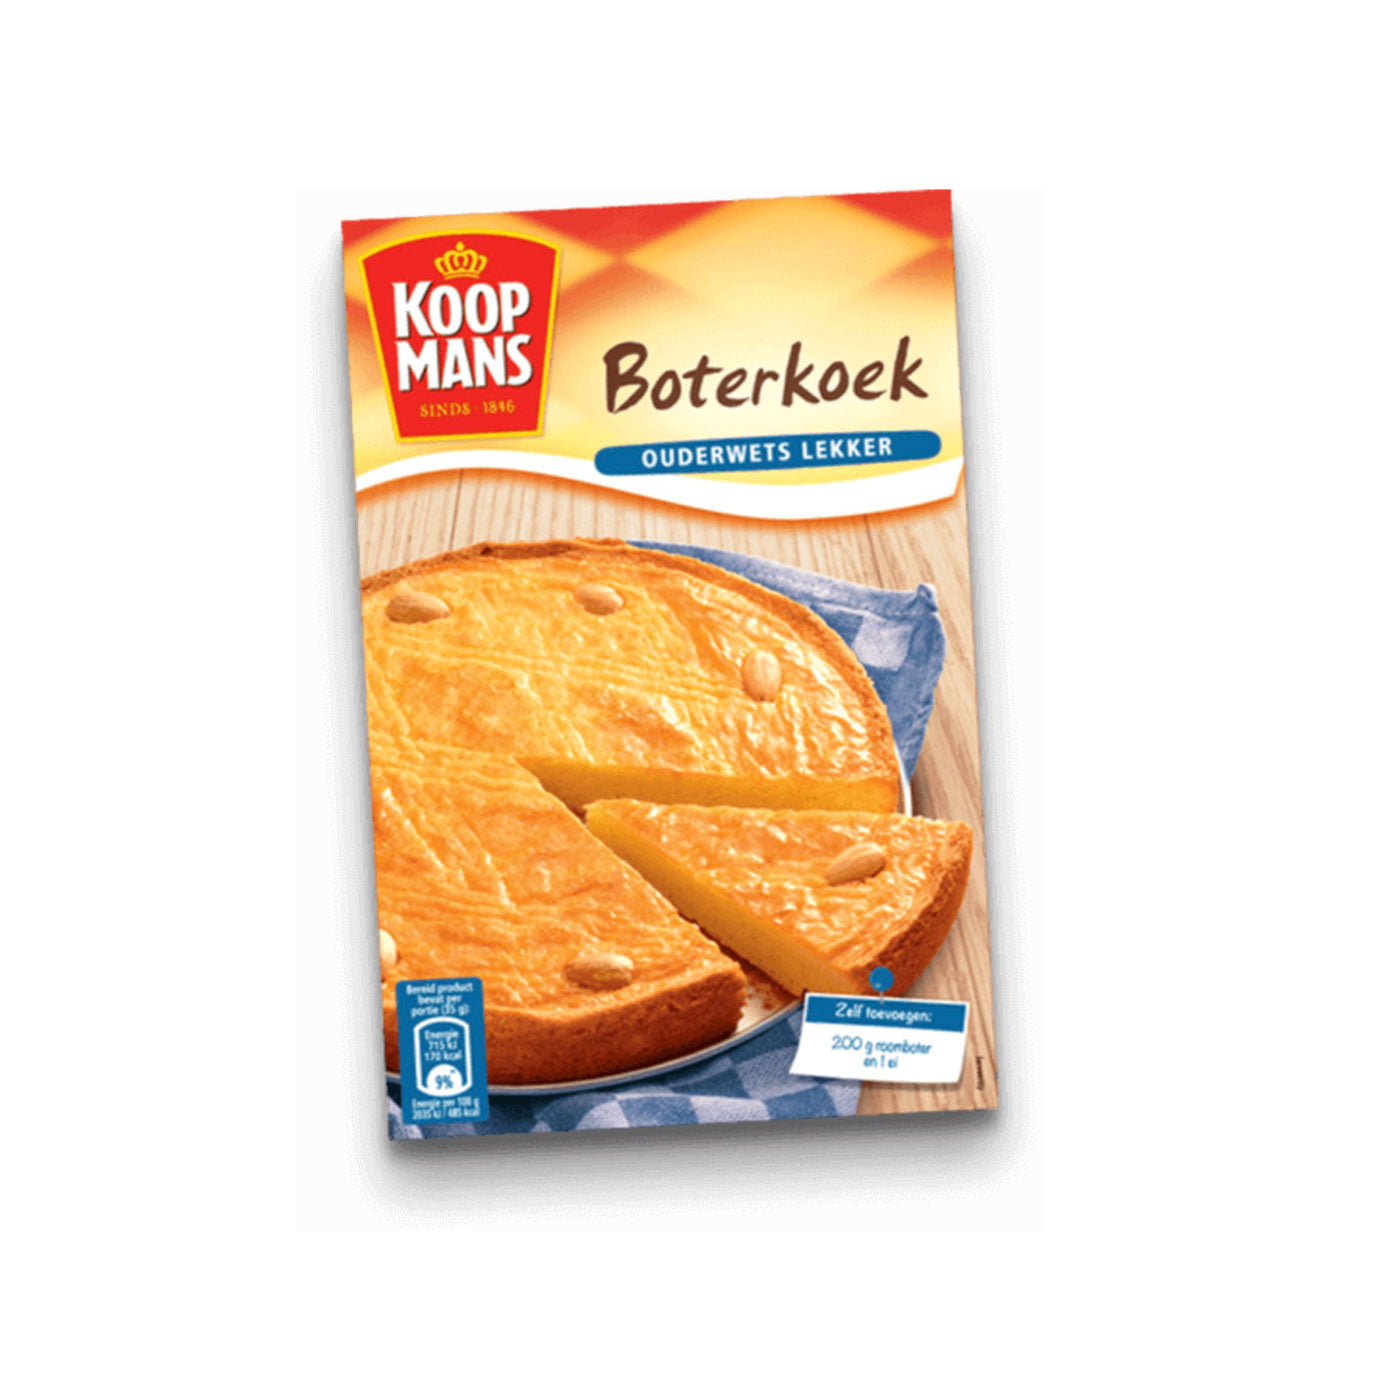 Koopmans Butter Cook Mix - Authentic Dutch Food Recipe - ART Food Store Boterkoek - Quick & Easy to Make! - Image 1